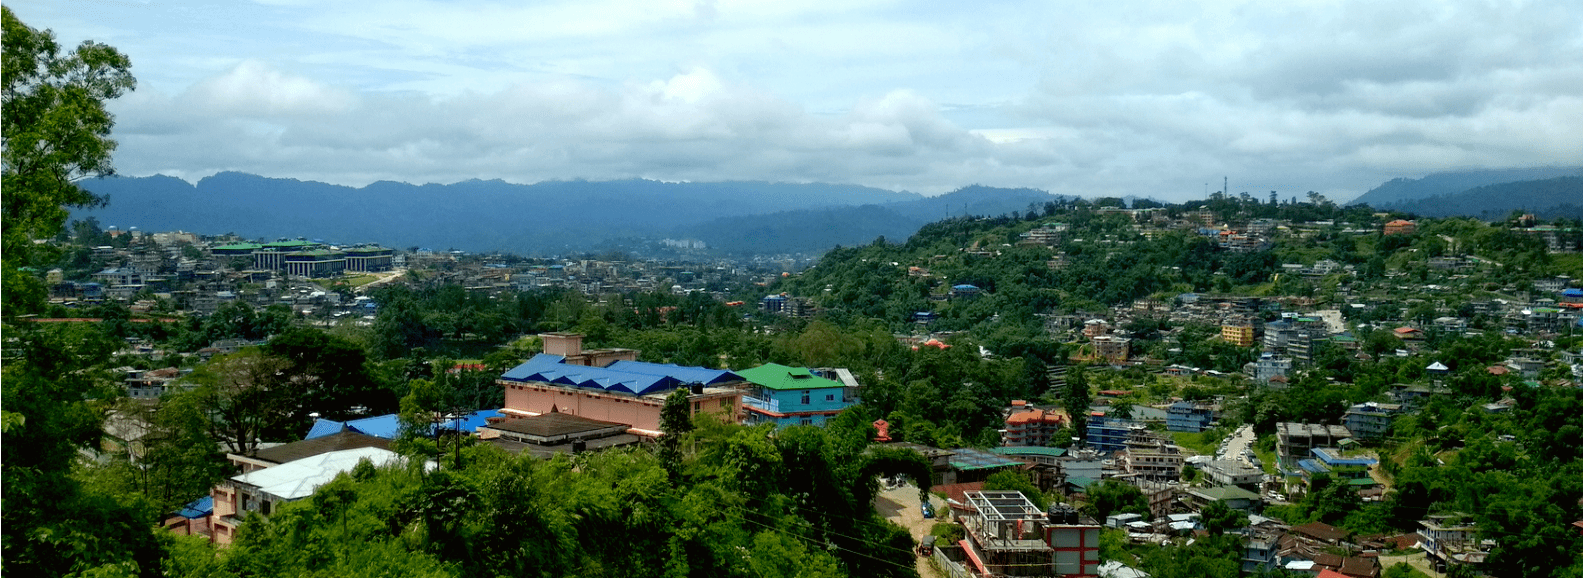 Beautiful mountain cityscape of Itanagar located in Arunachal Pradesh